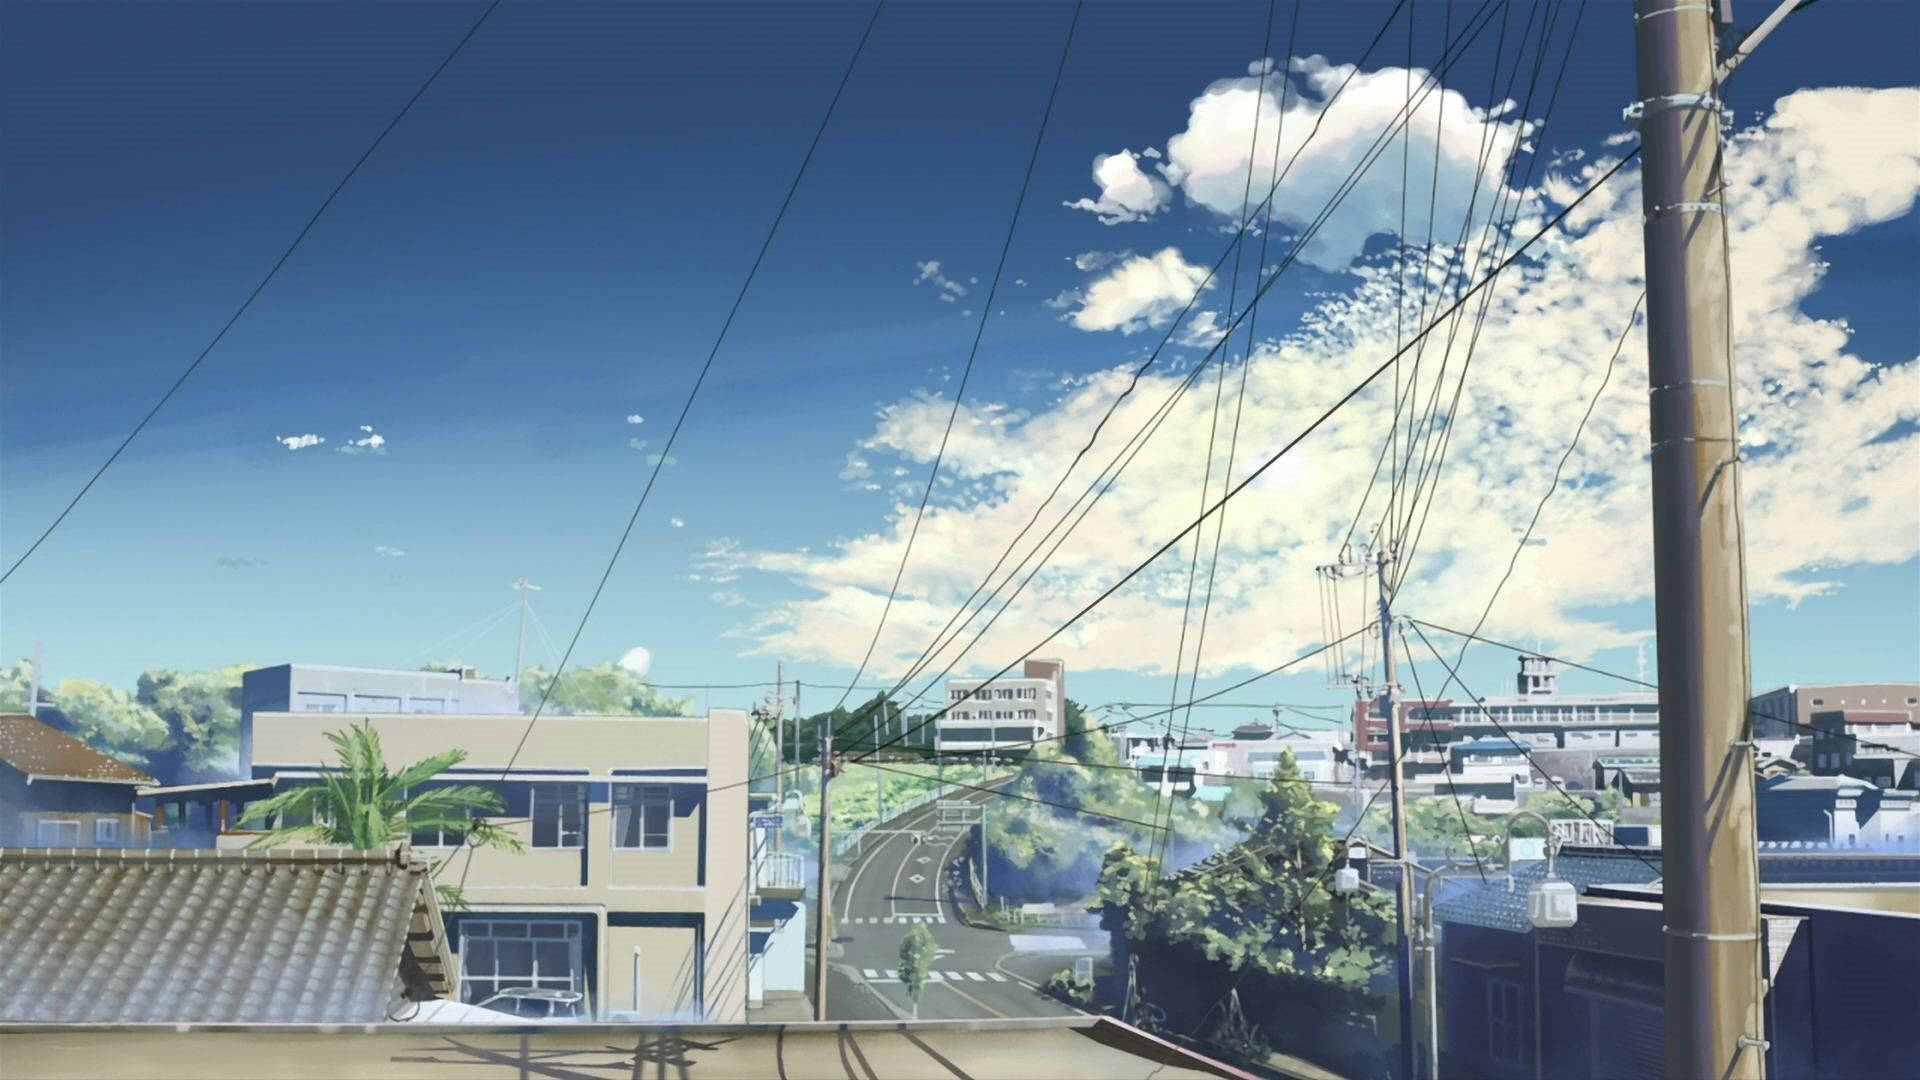 Blue Anime Aesthetic Wallpaper Full HD, 4K Free to Use